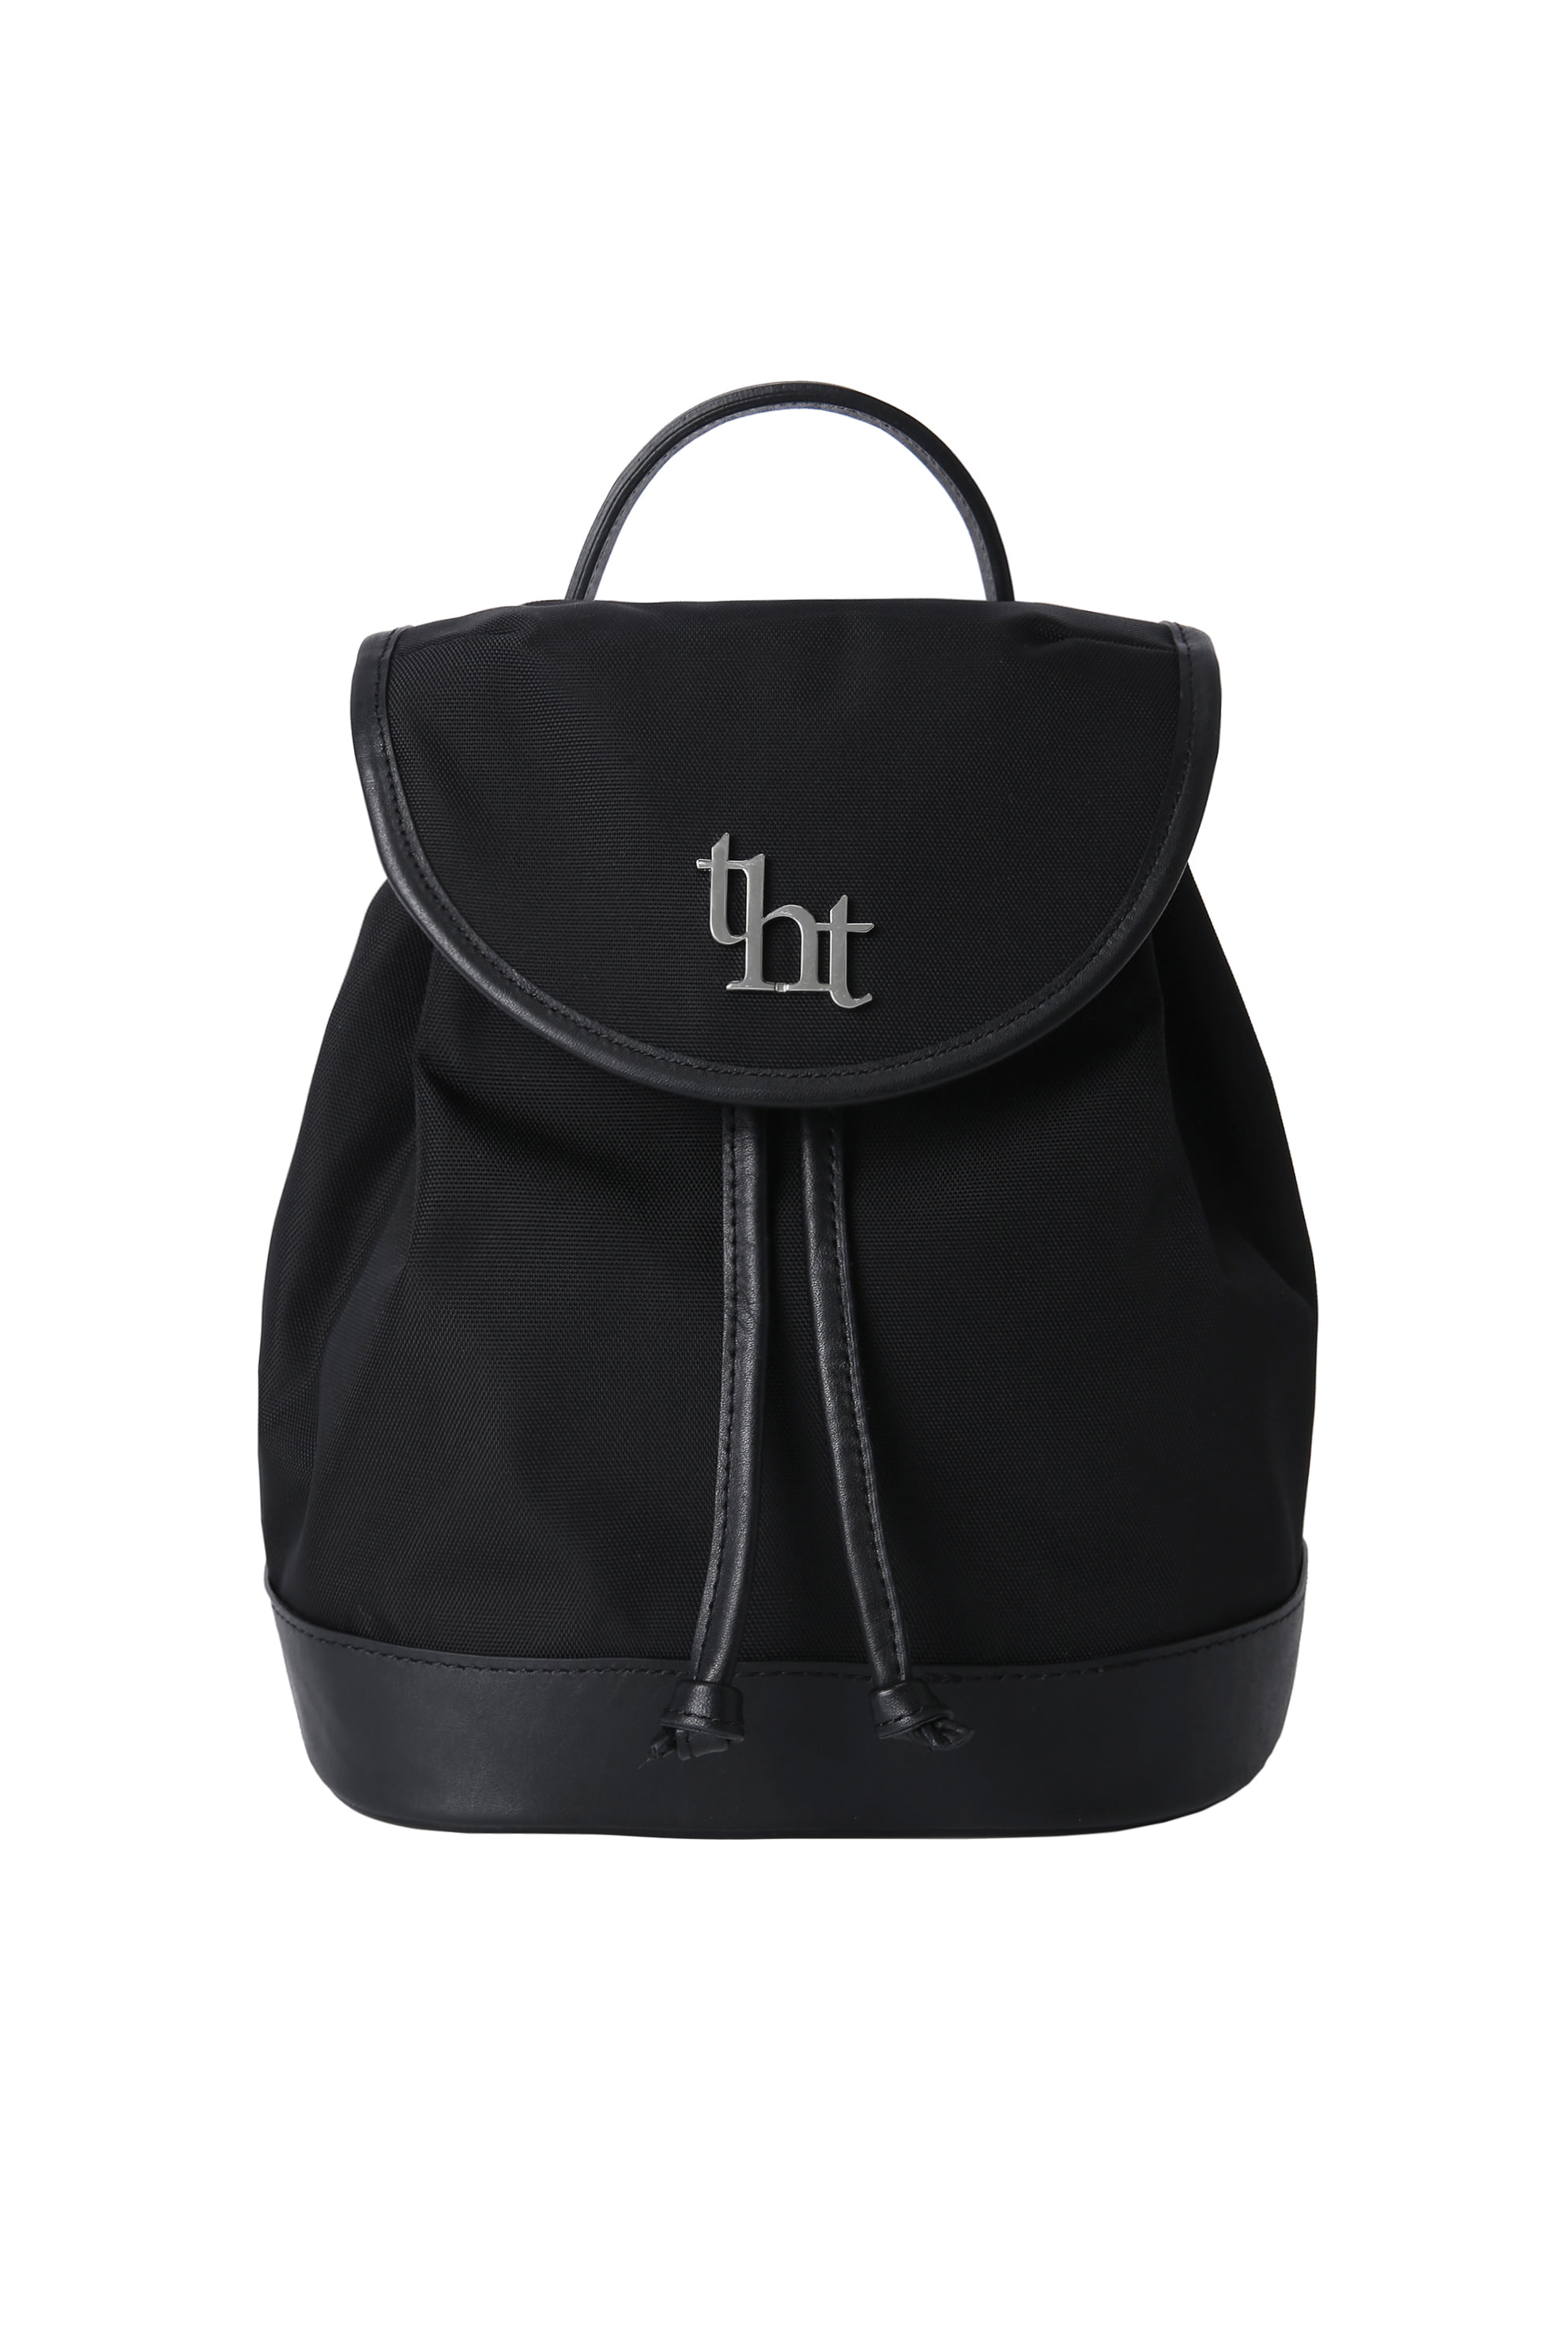 [8th Pre-order] Acorn backpack